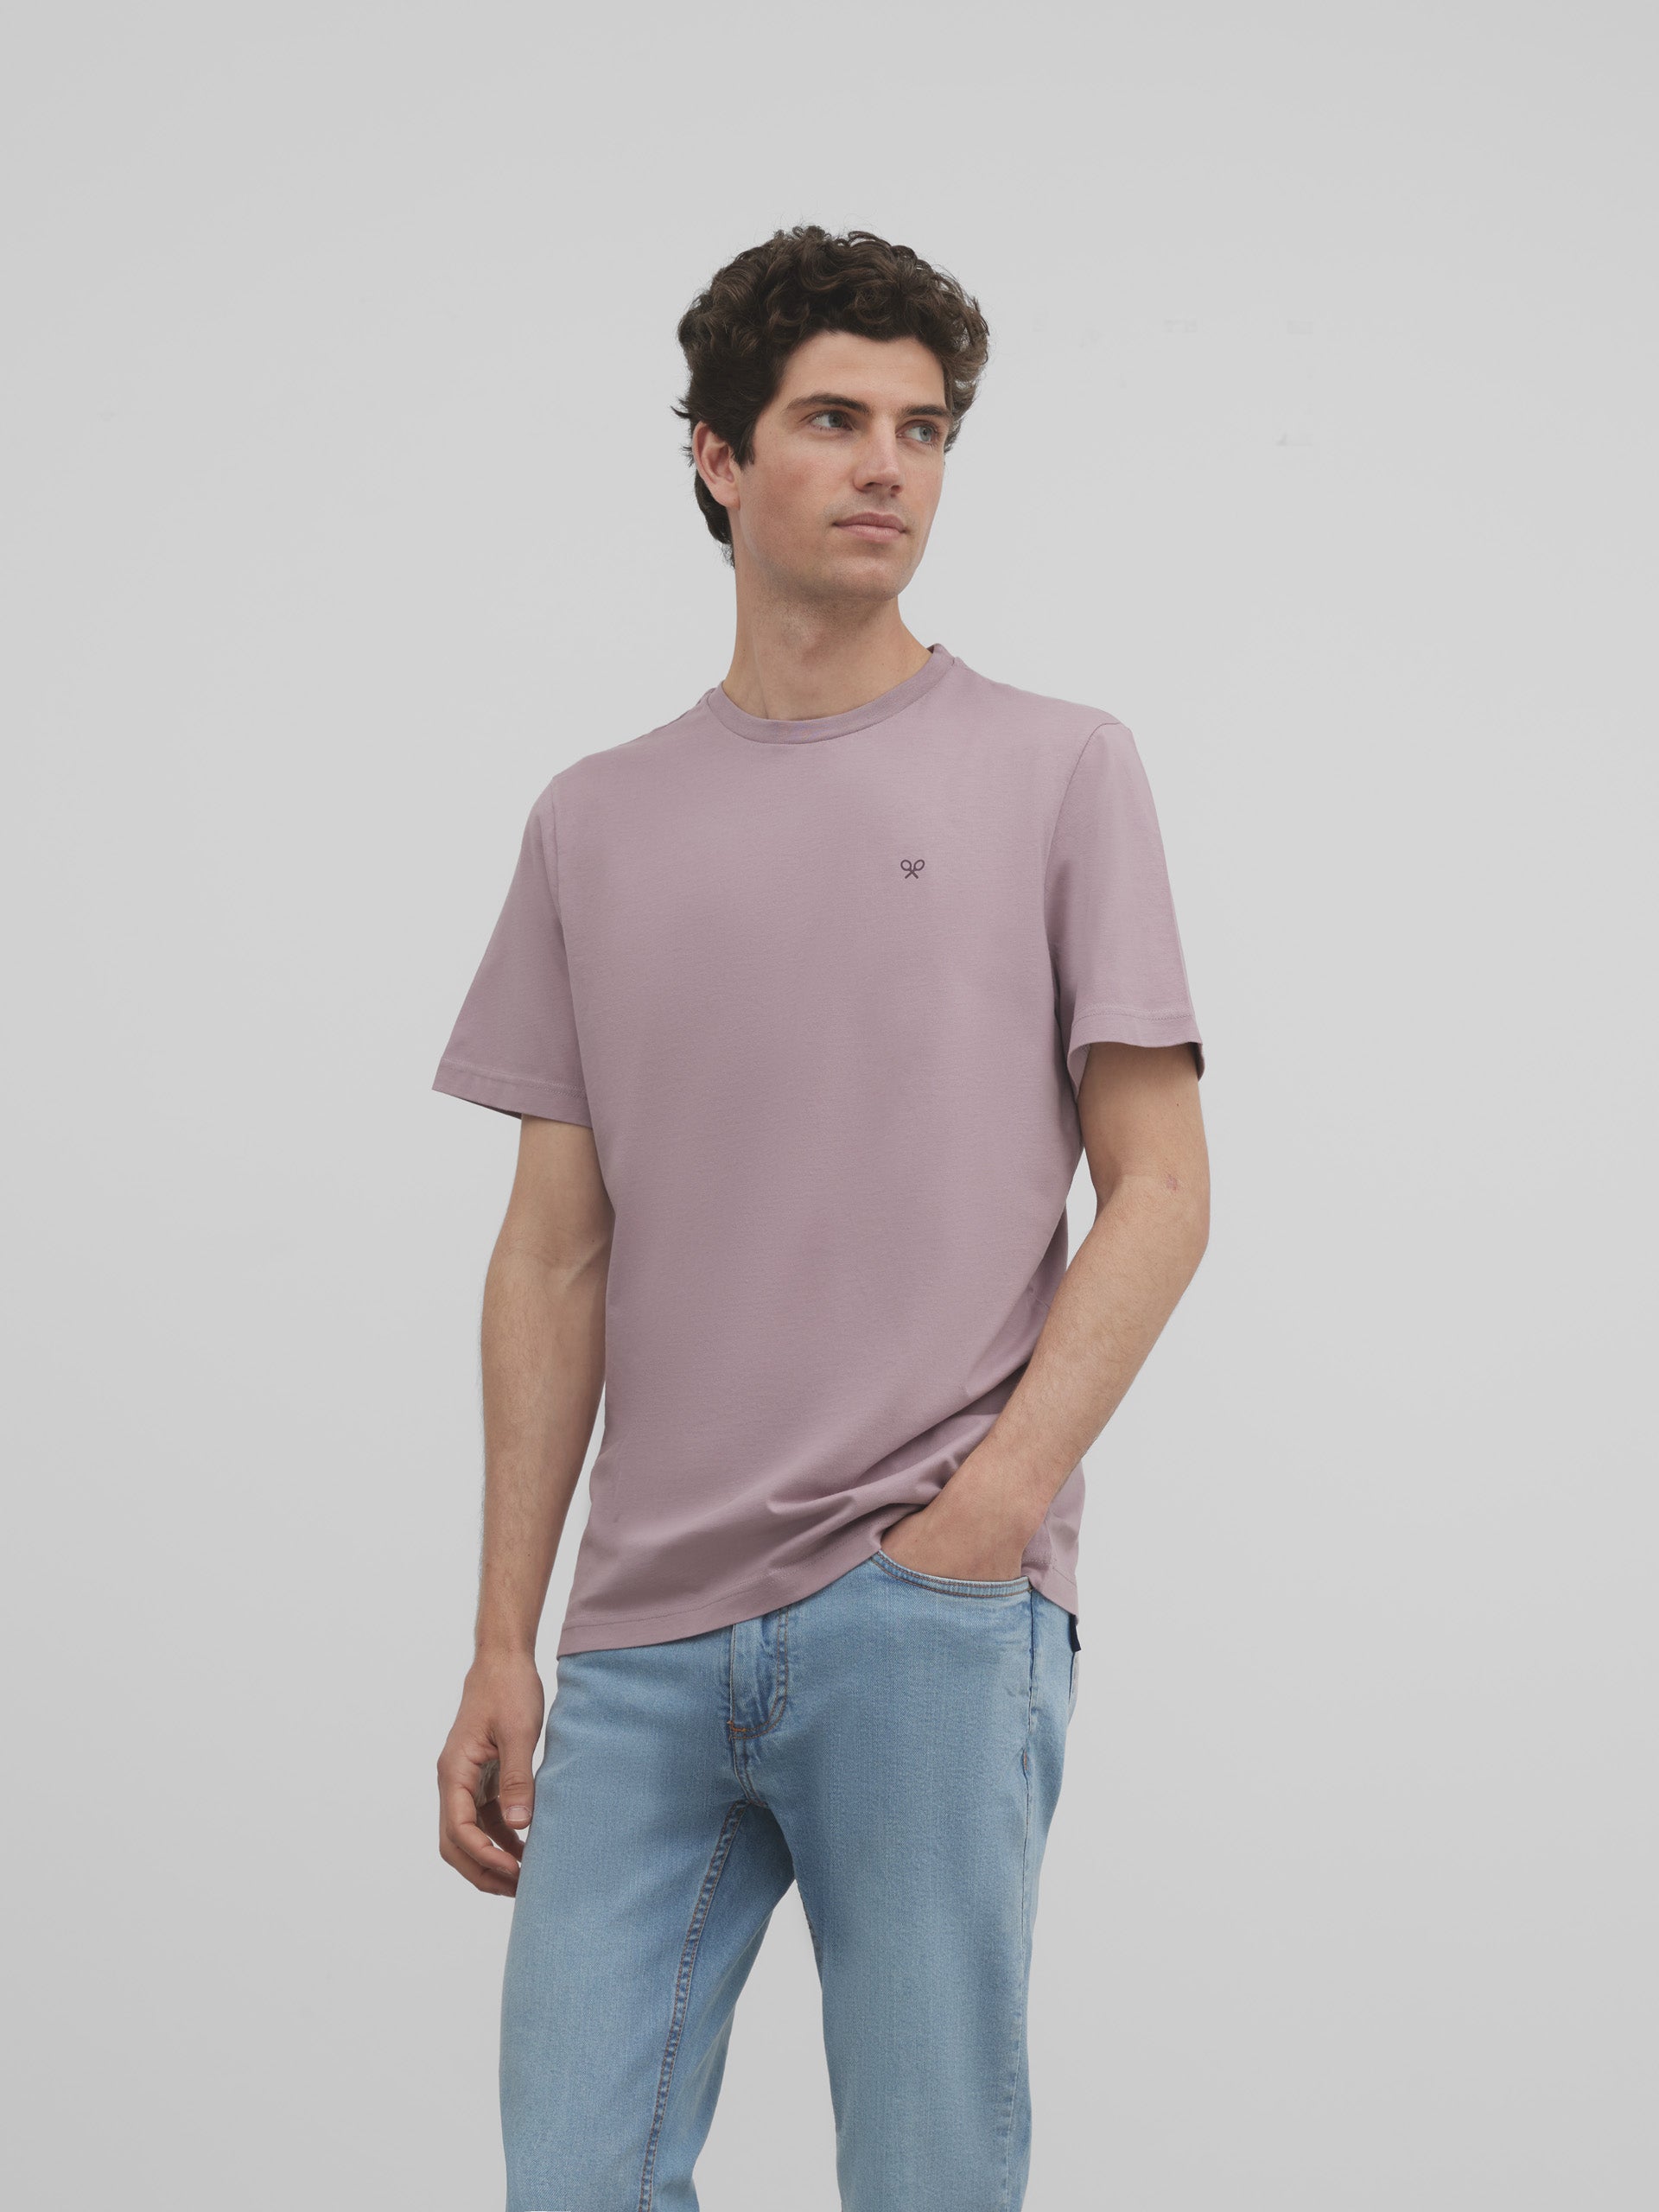 Camiseta silbon raqueta trasera purpura